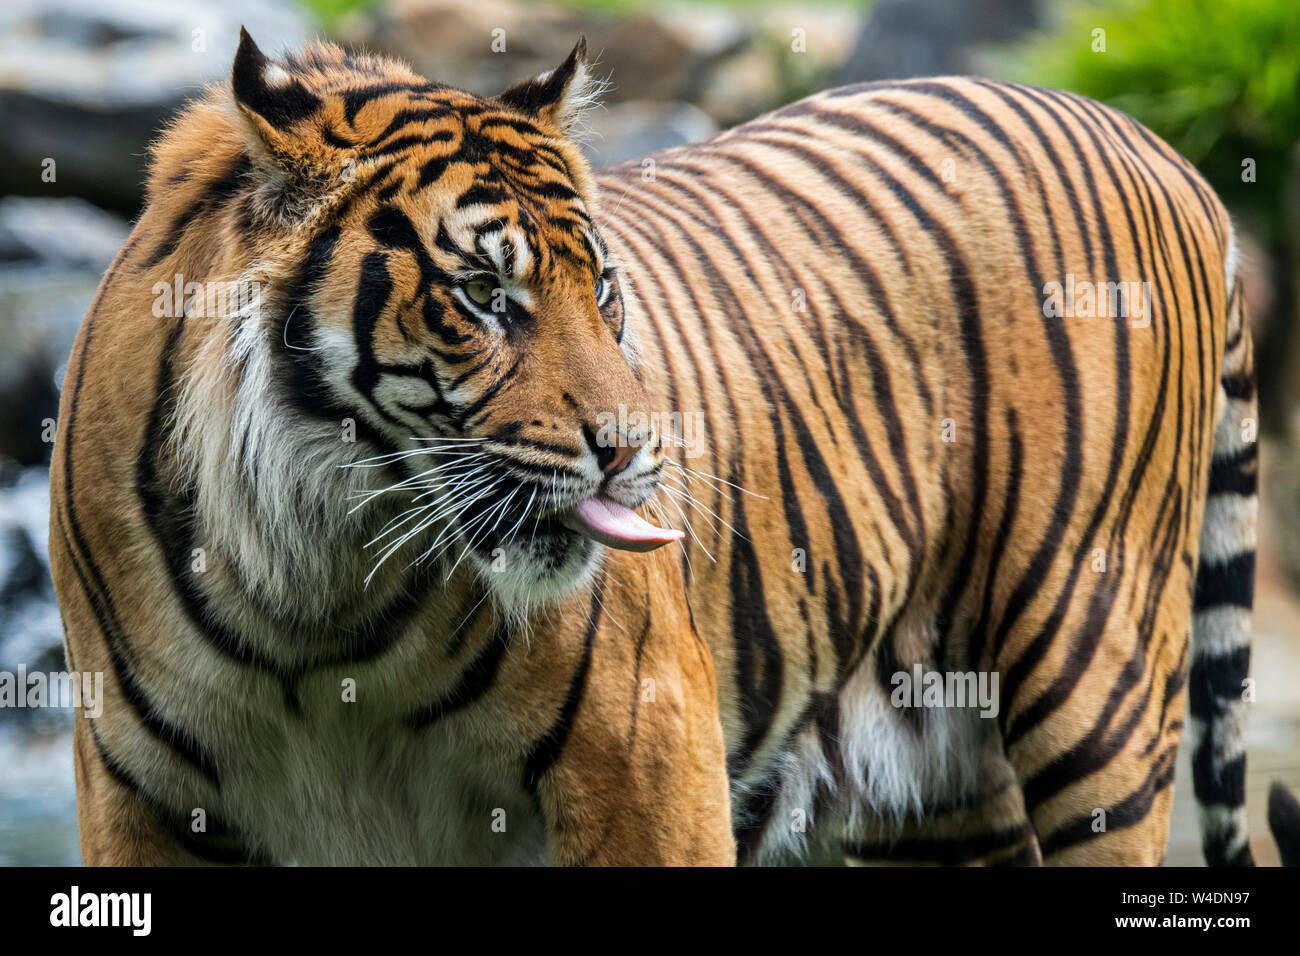 Sumatra-tiger (Panthera tigris sondaica) Zunge heraus, native auf der indonesischen Insel Sumatra, Indonesien Stockfoto